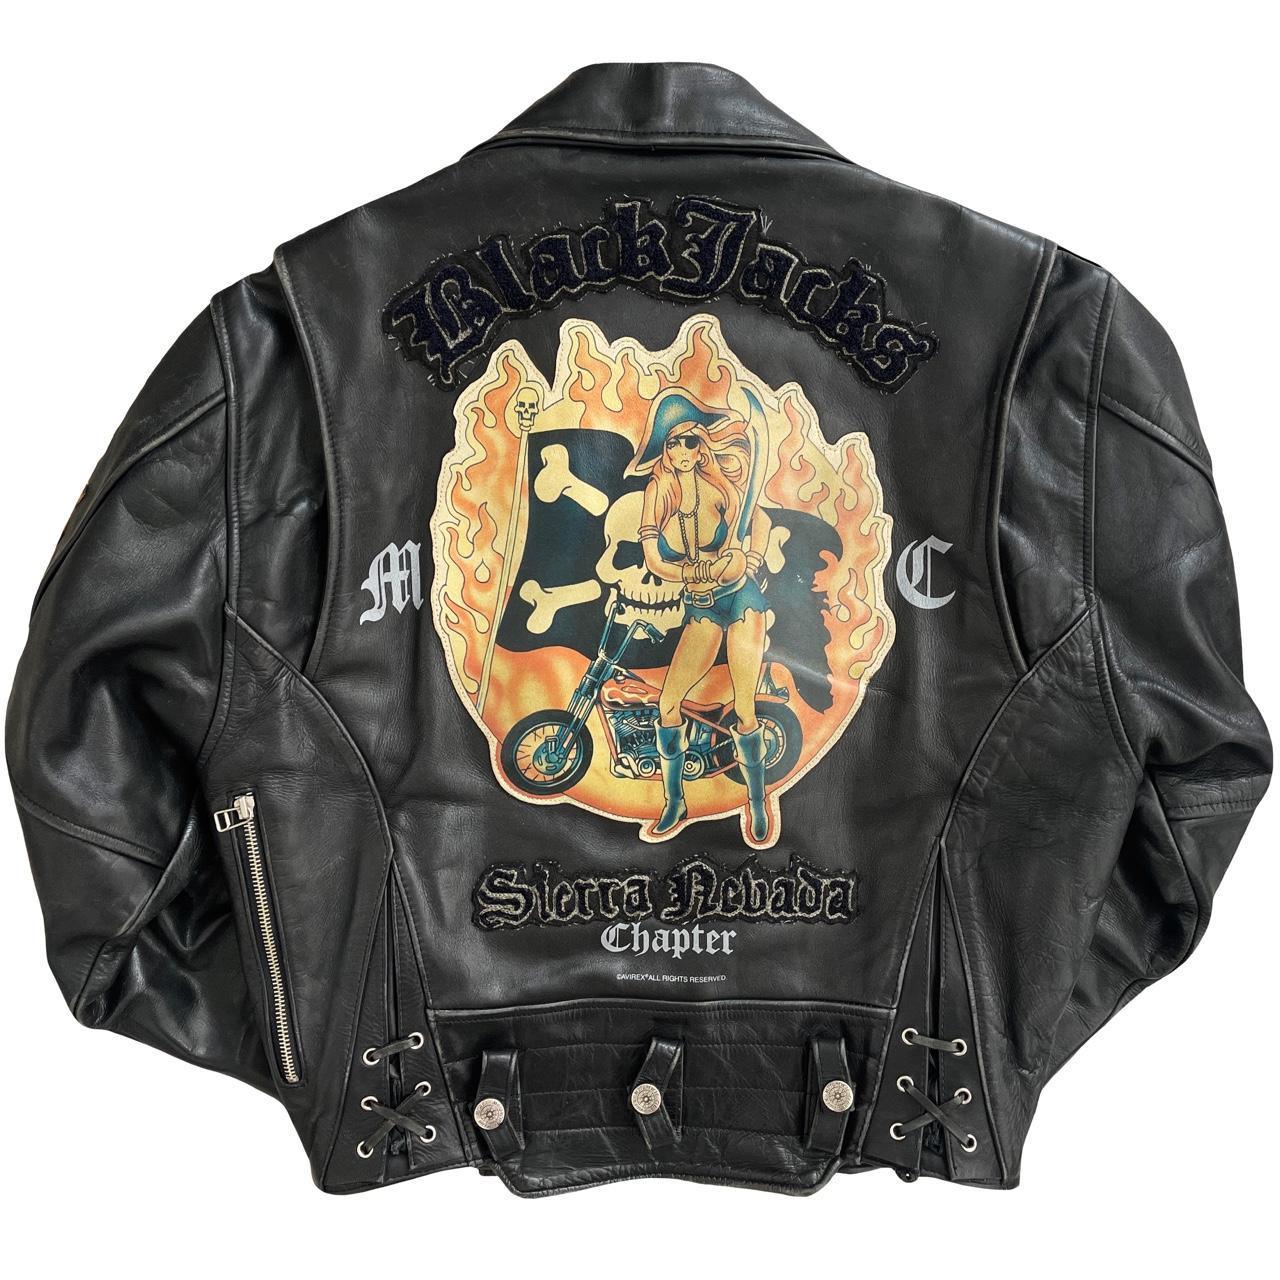 Avirex Leather Biker Jacket - Known Source